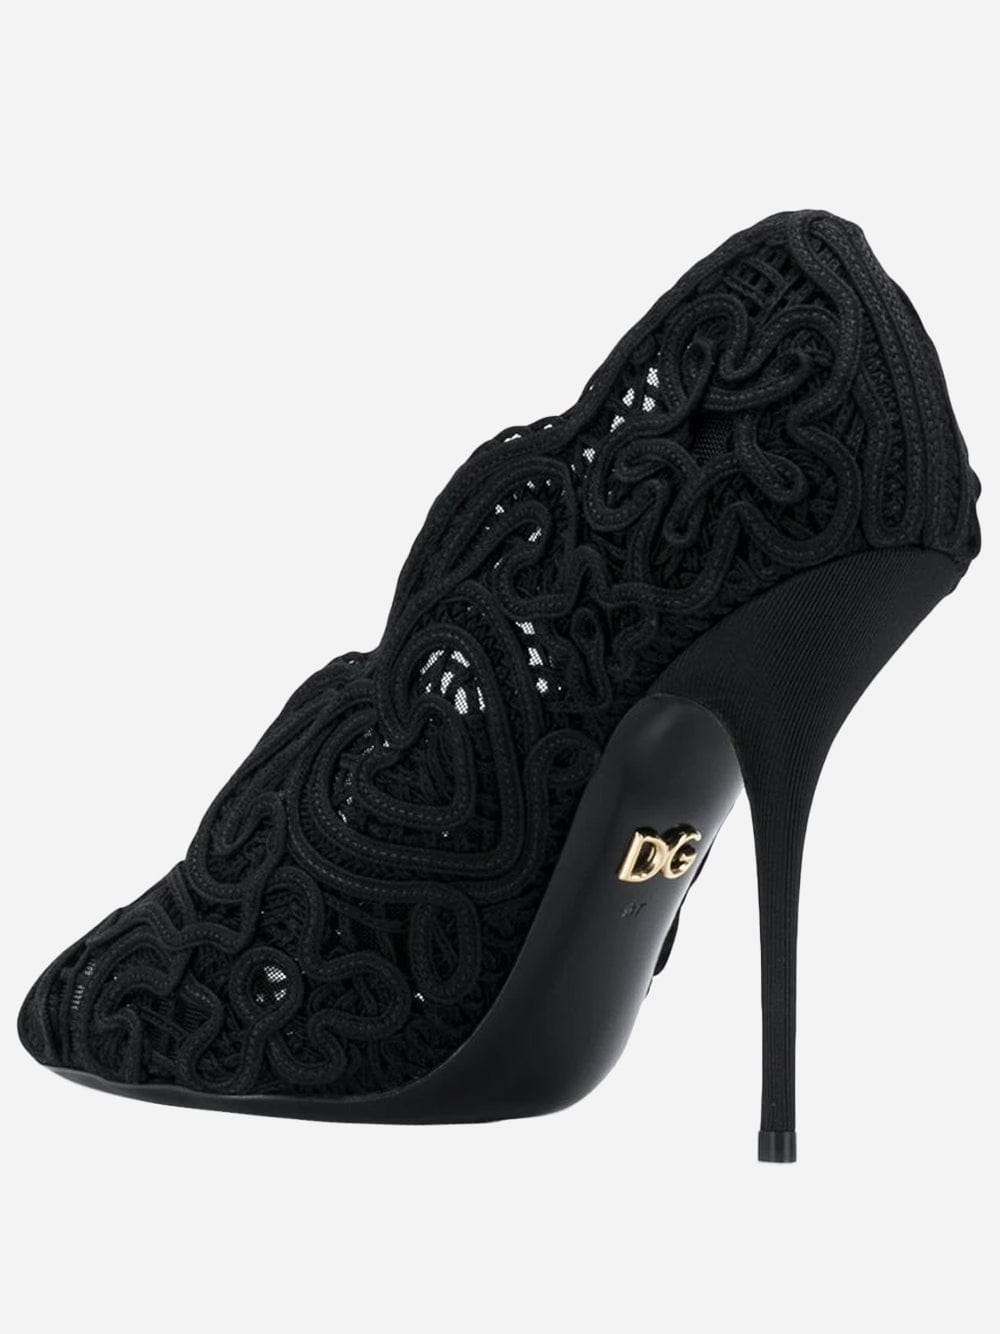 Dolce & Gabbana Cordonetto Lace Peep-Toe Pumps